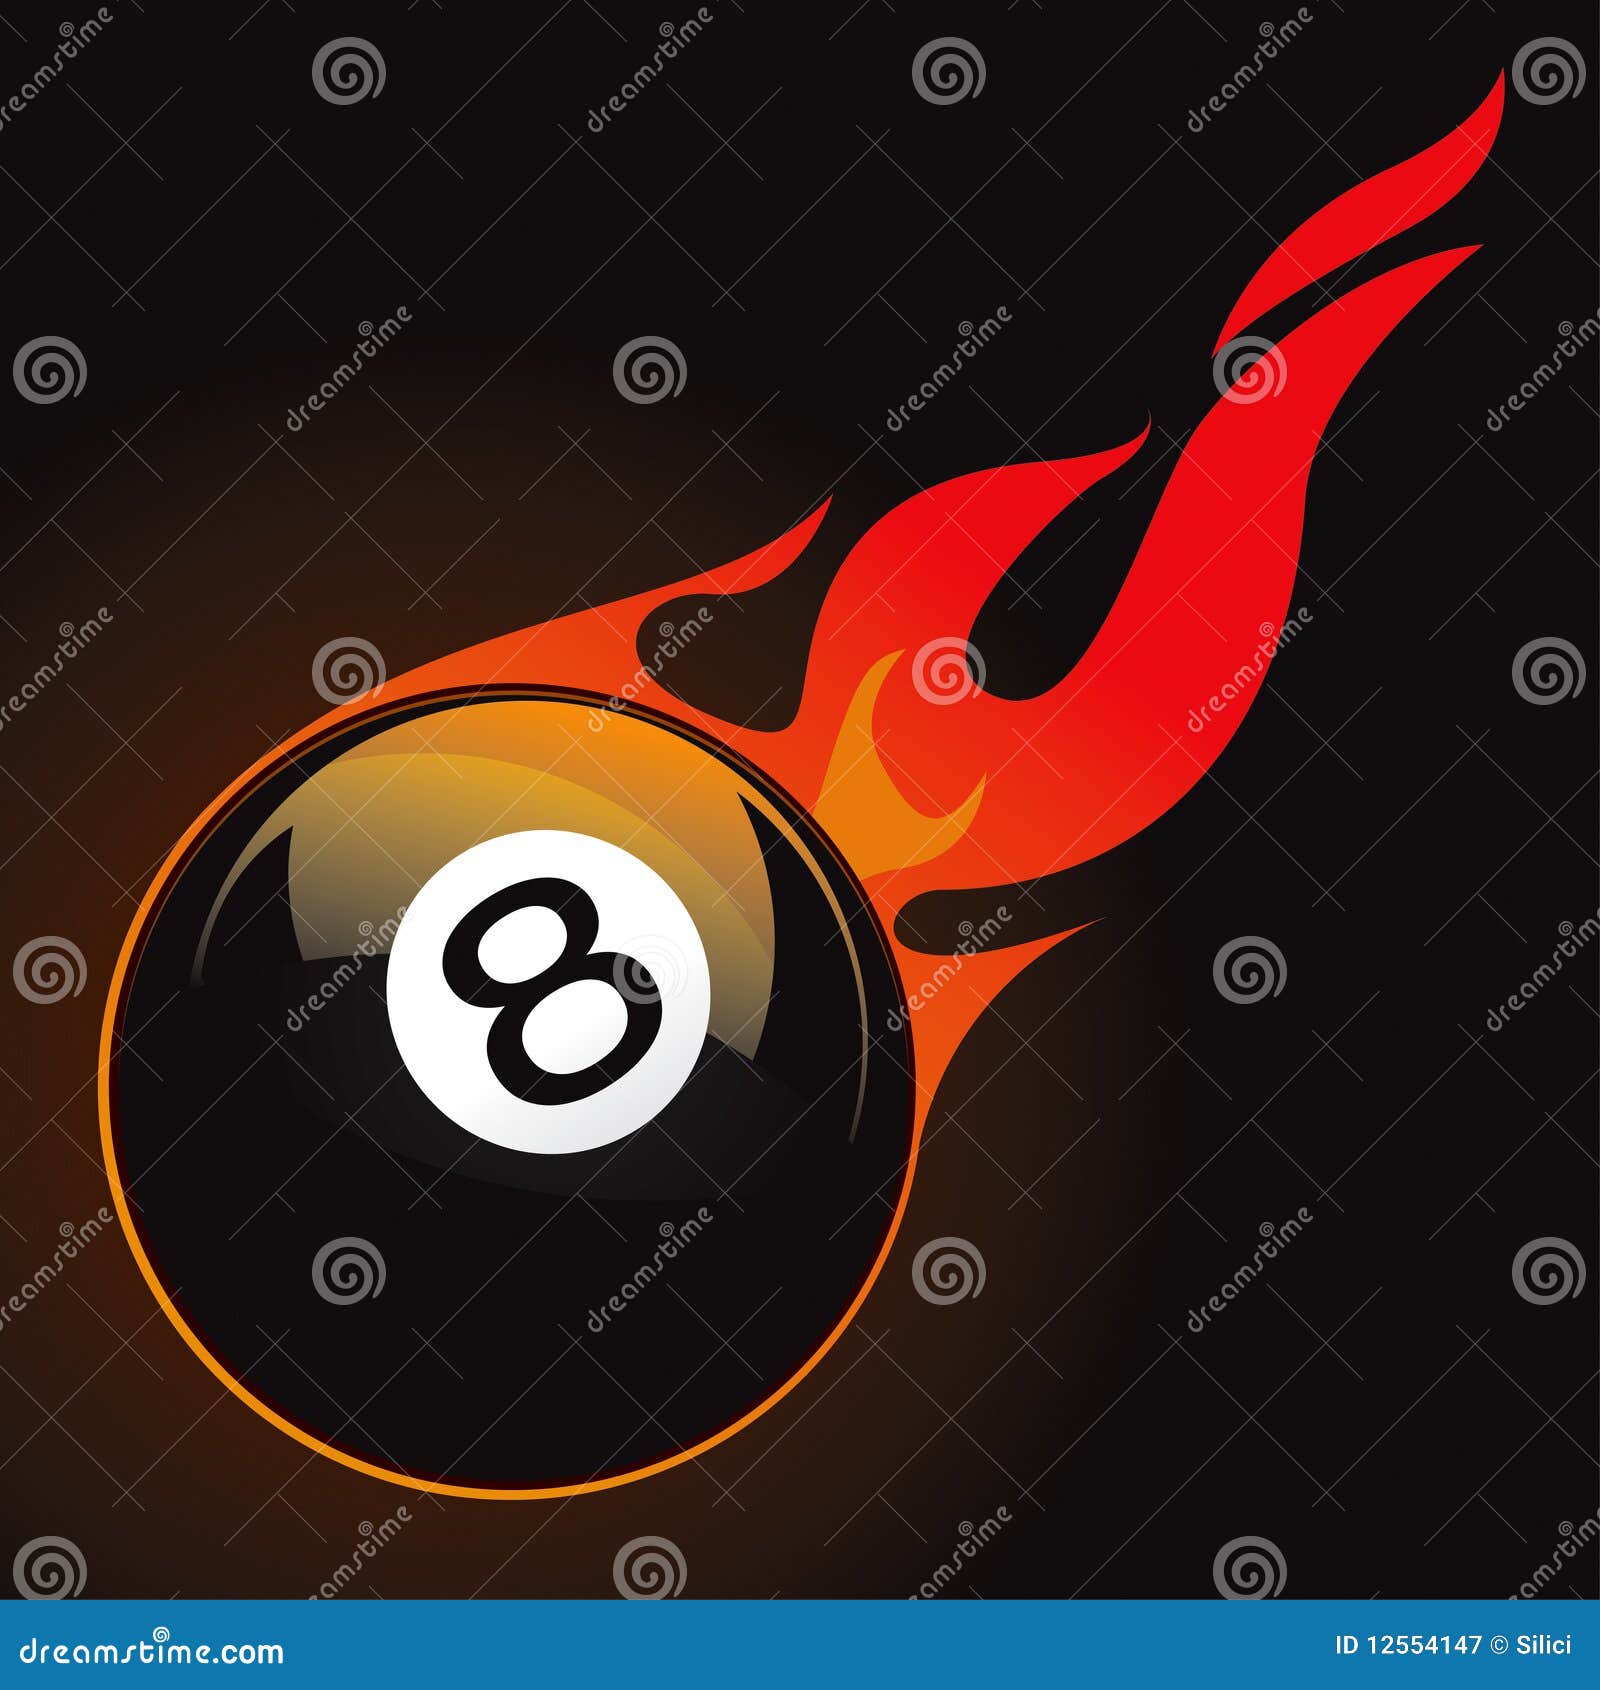 8 pool fire ball stock vector. Illustration of black - 12554147